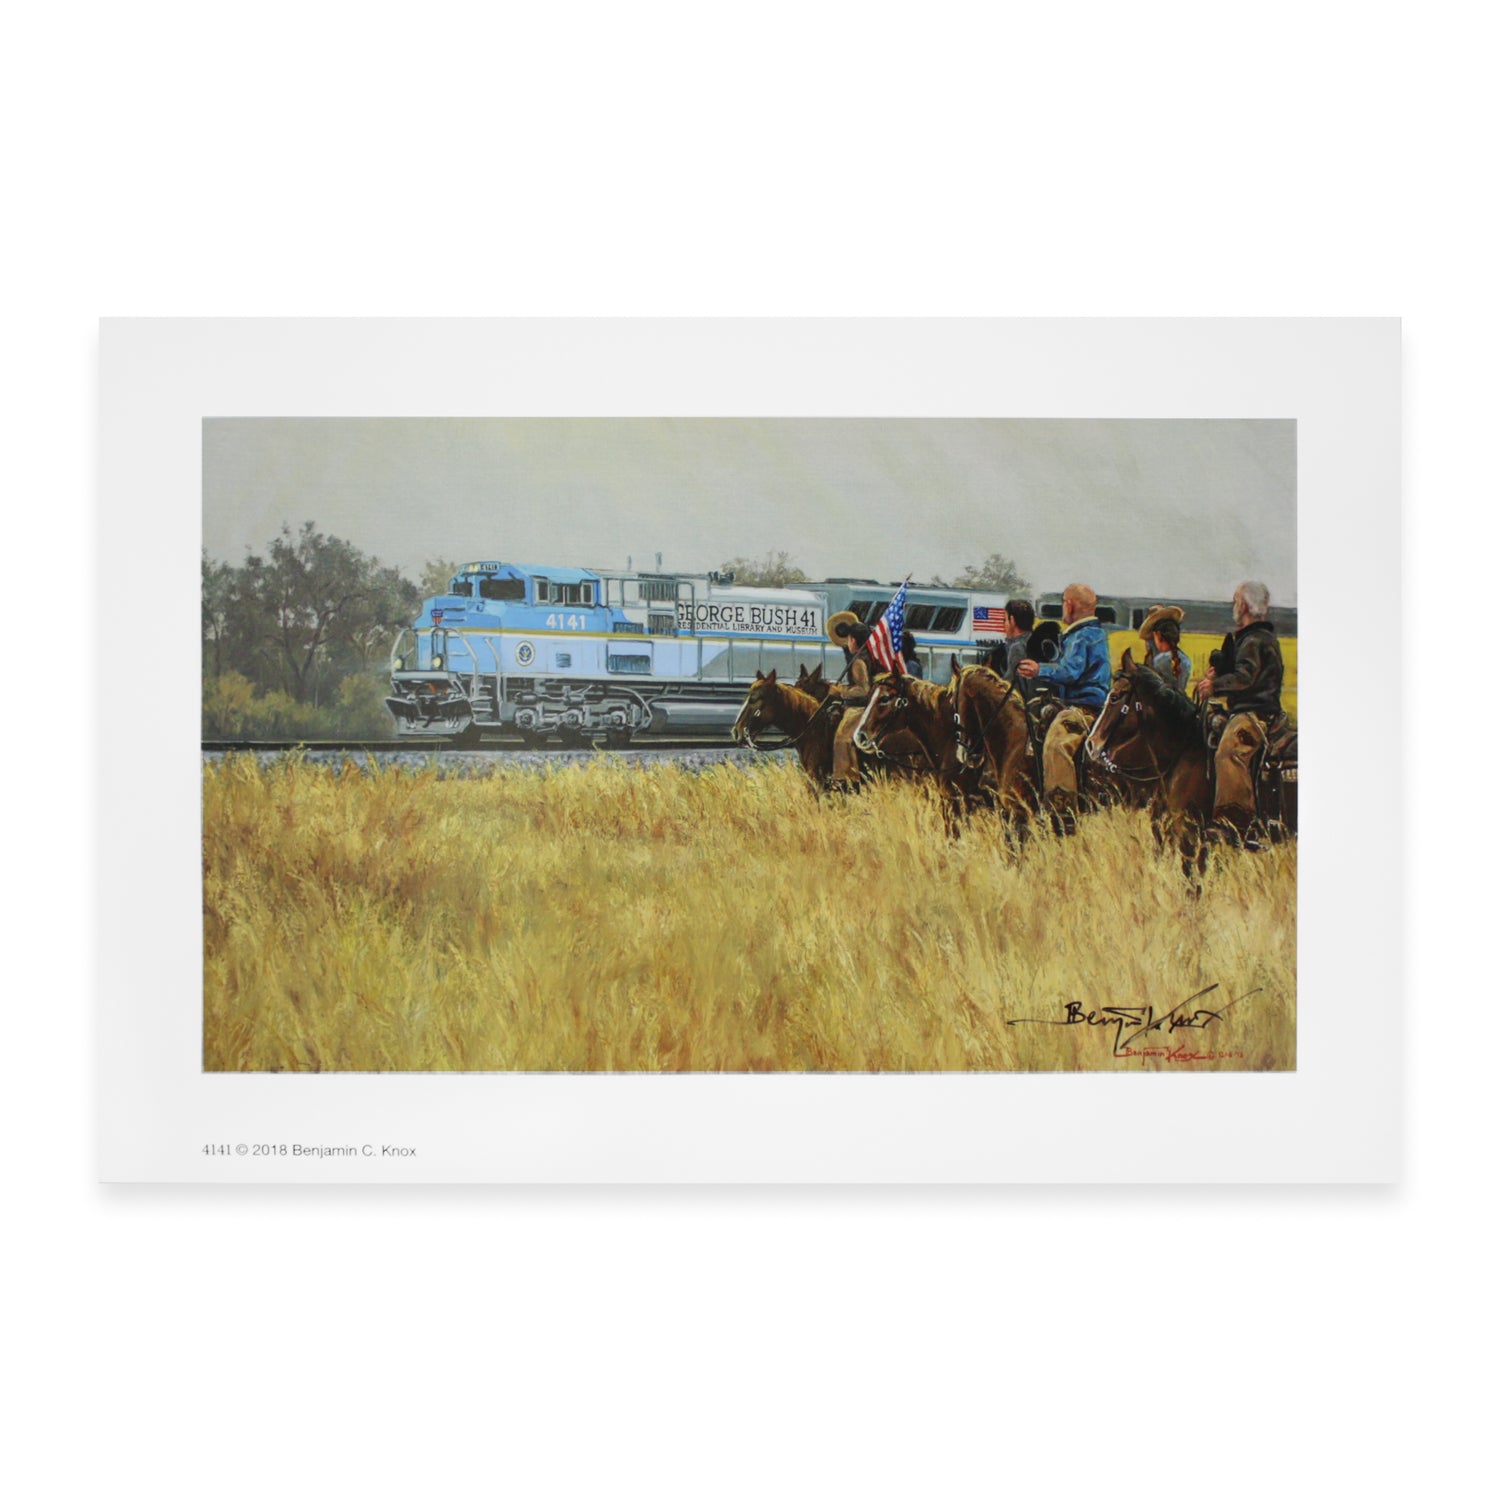 Benjamin Knox 4141 Train Limited Edition Small Print